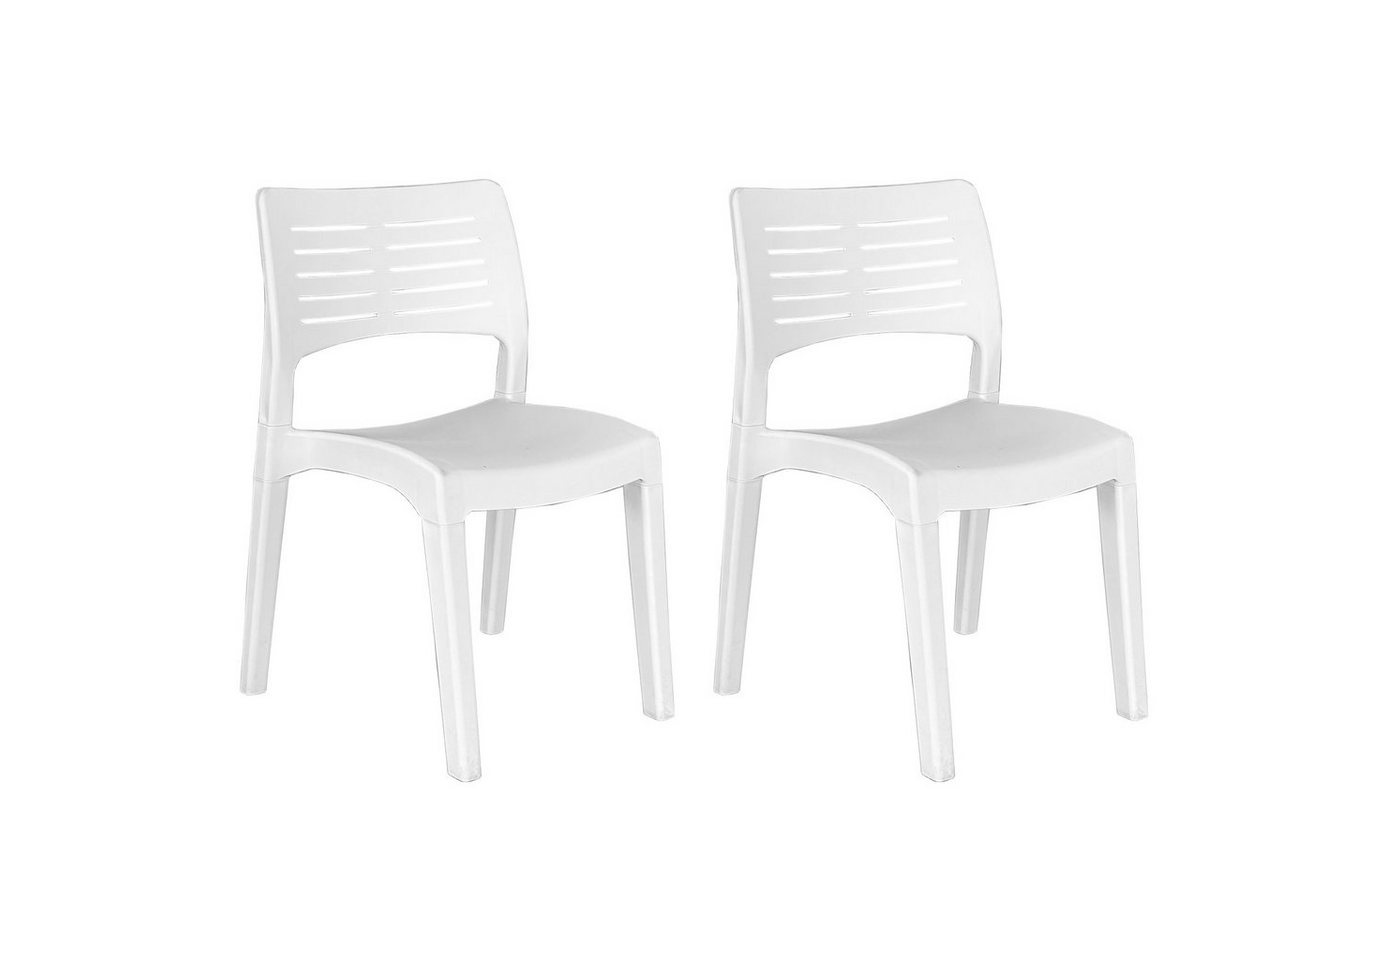 Mojawo Armlehnstuhl 2x Stapelstuhl Bistrostuhl Stapelsessel Gartenstuhl Gartenmöbel Weiß Kunststoff von Mojawo